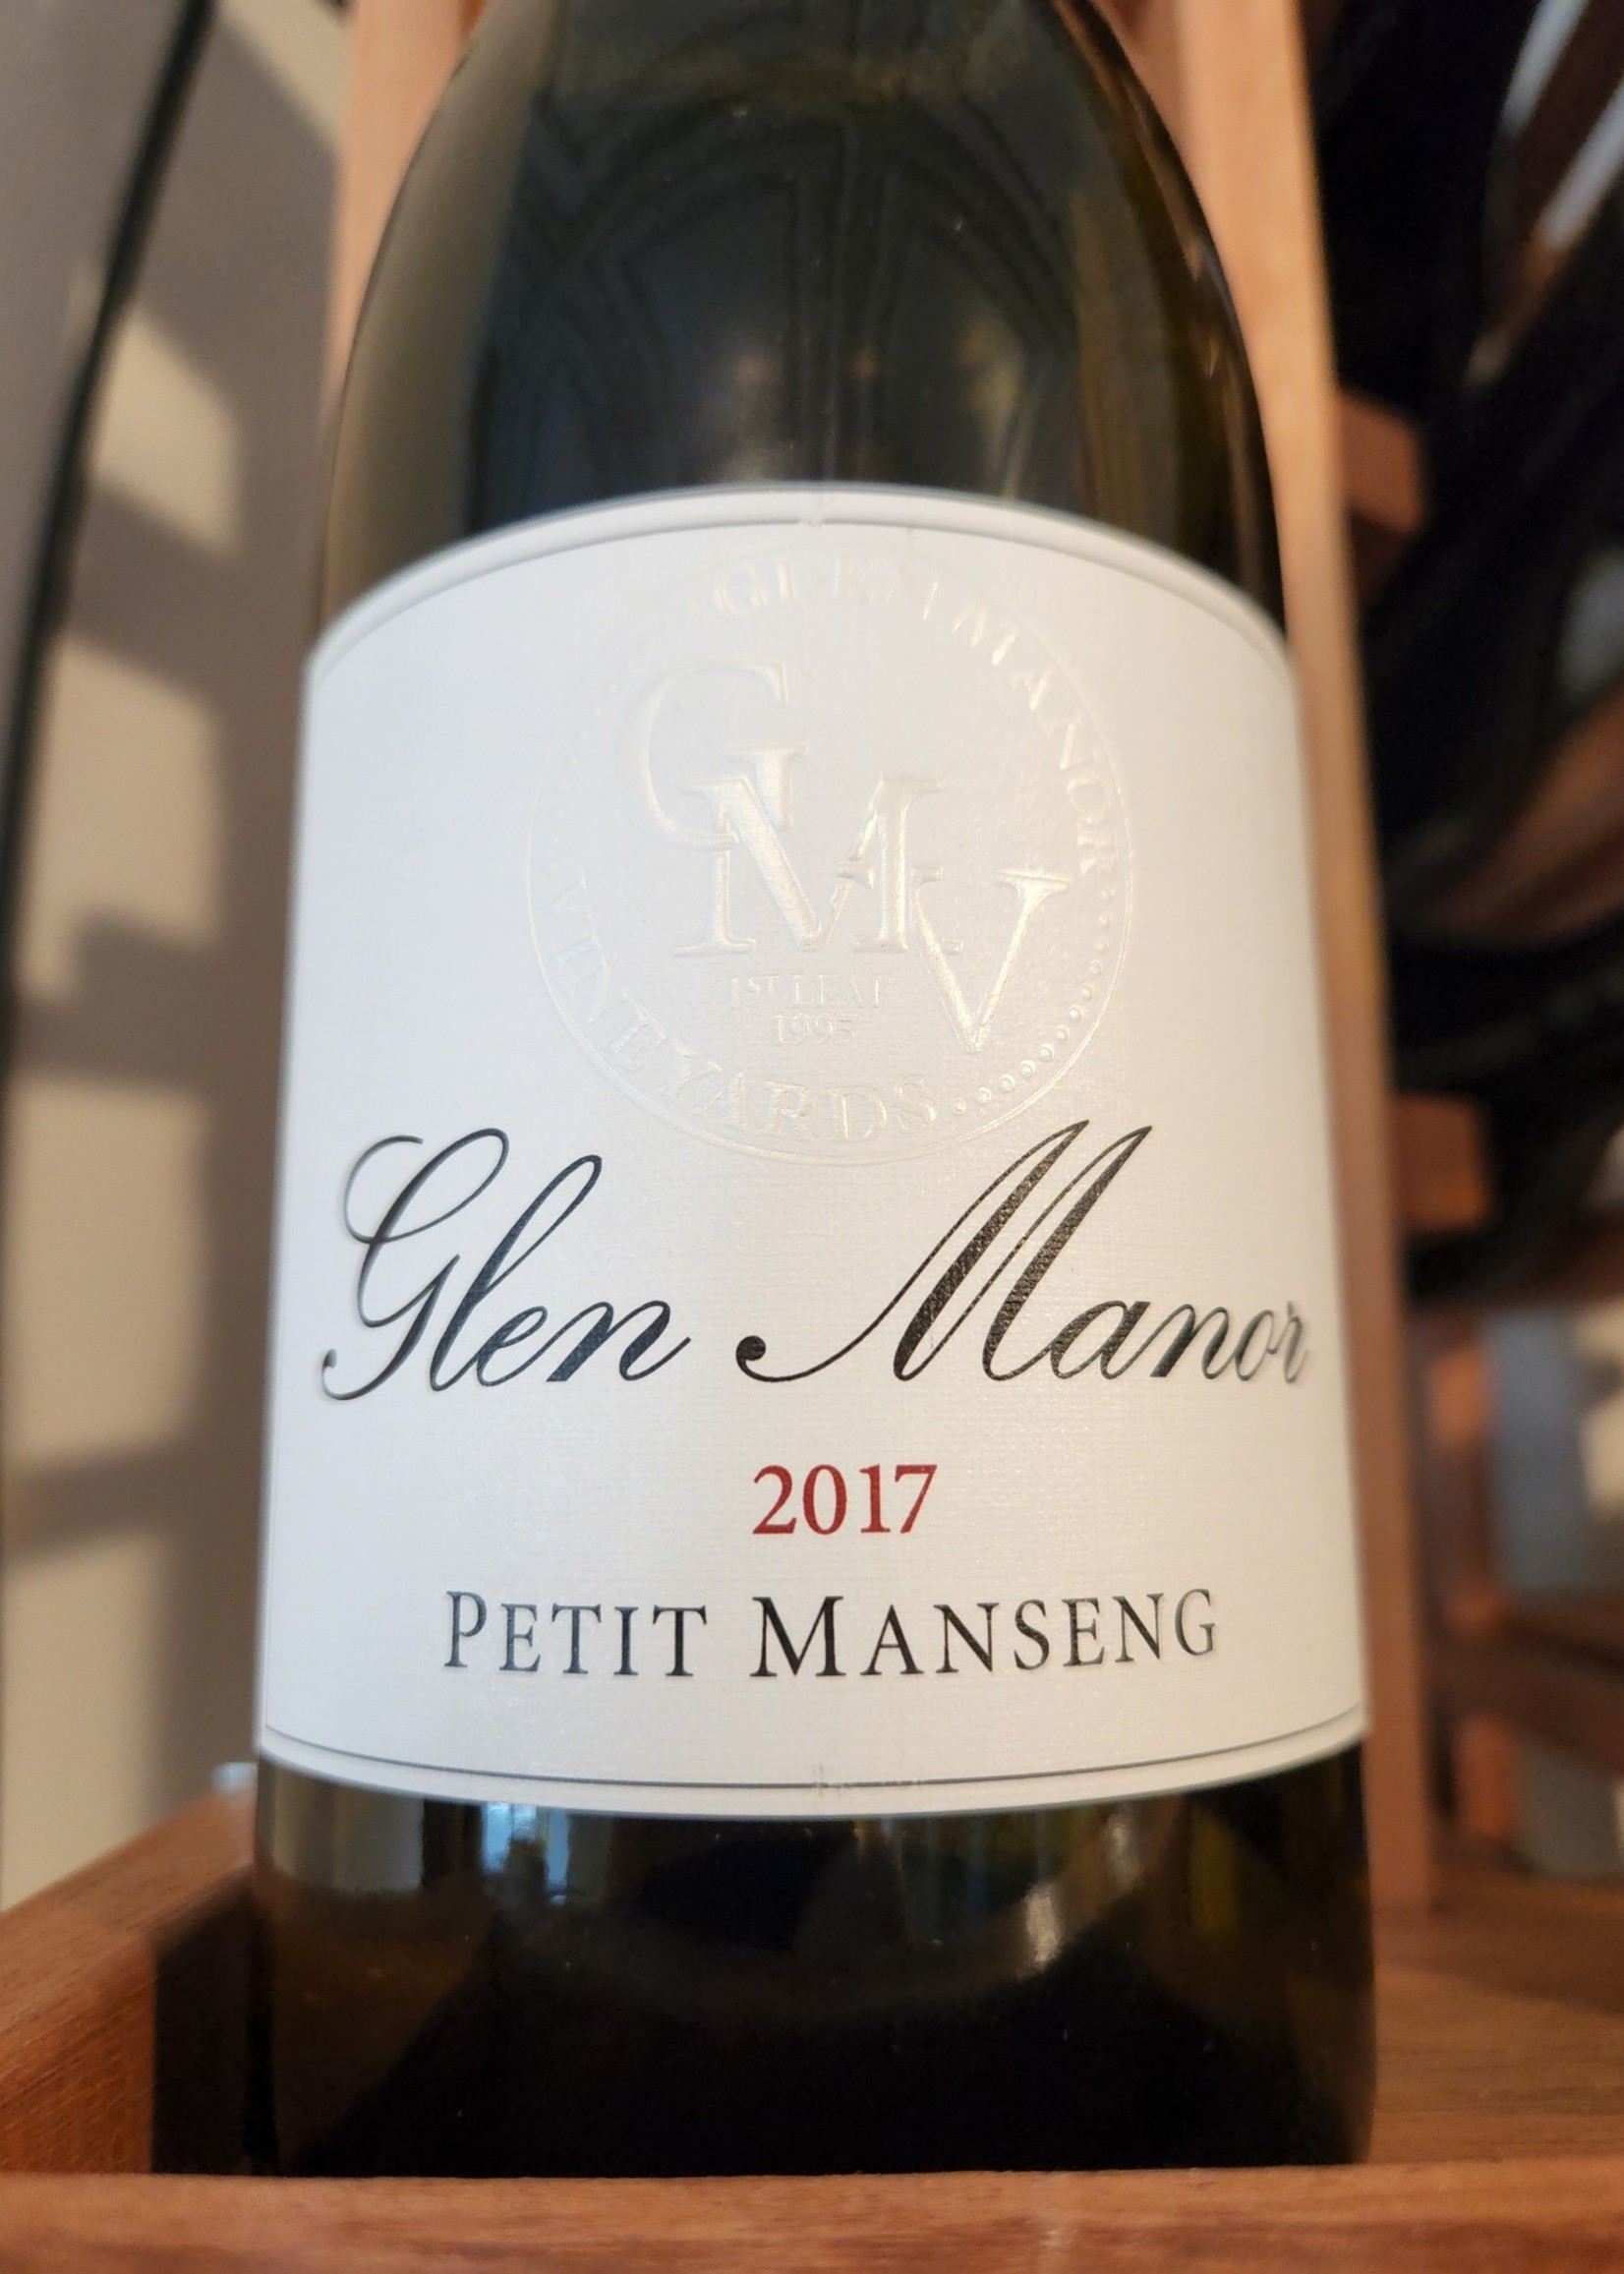 Glen Manor Virginia Petit Manseng 2017